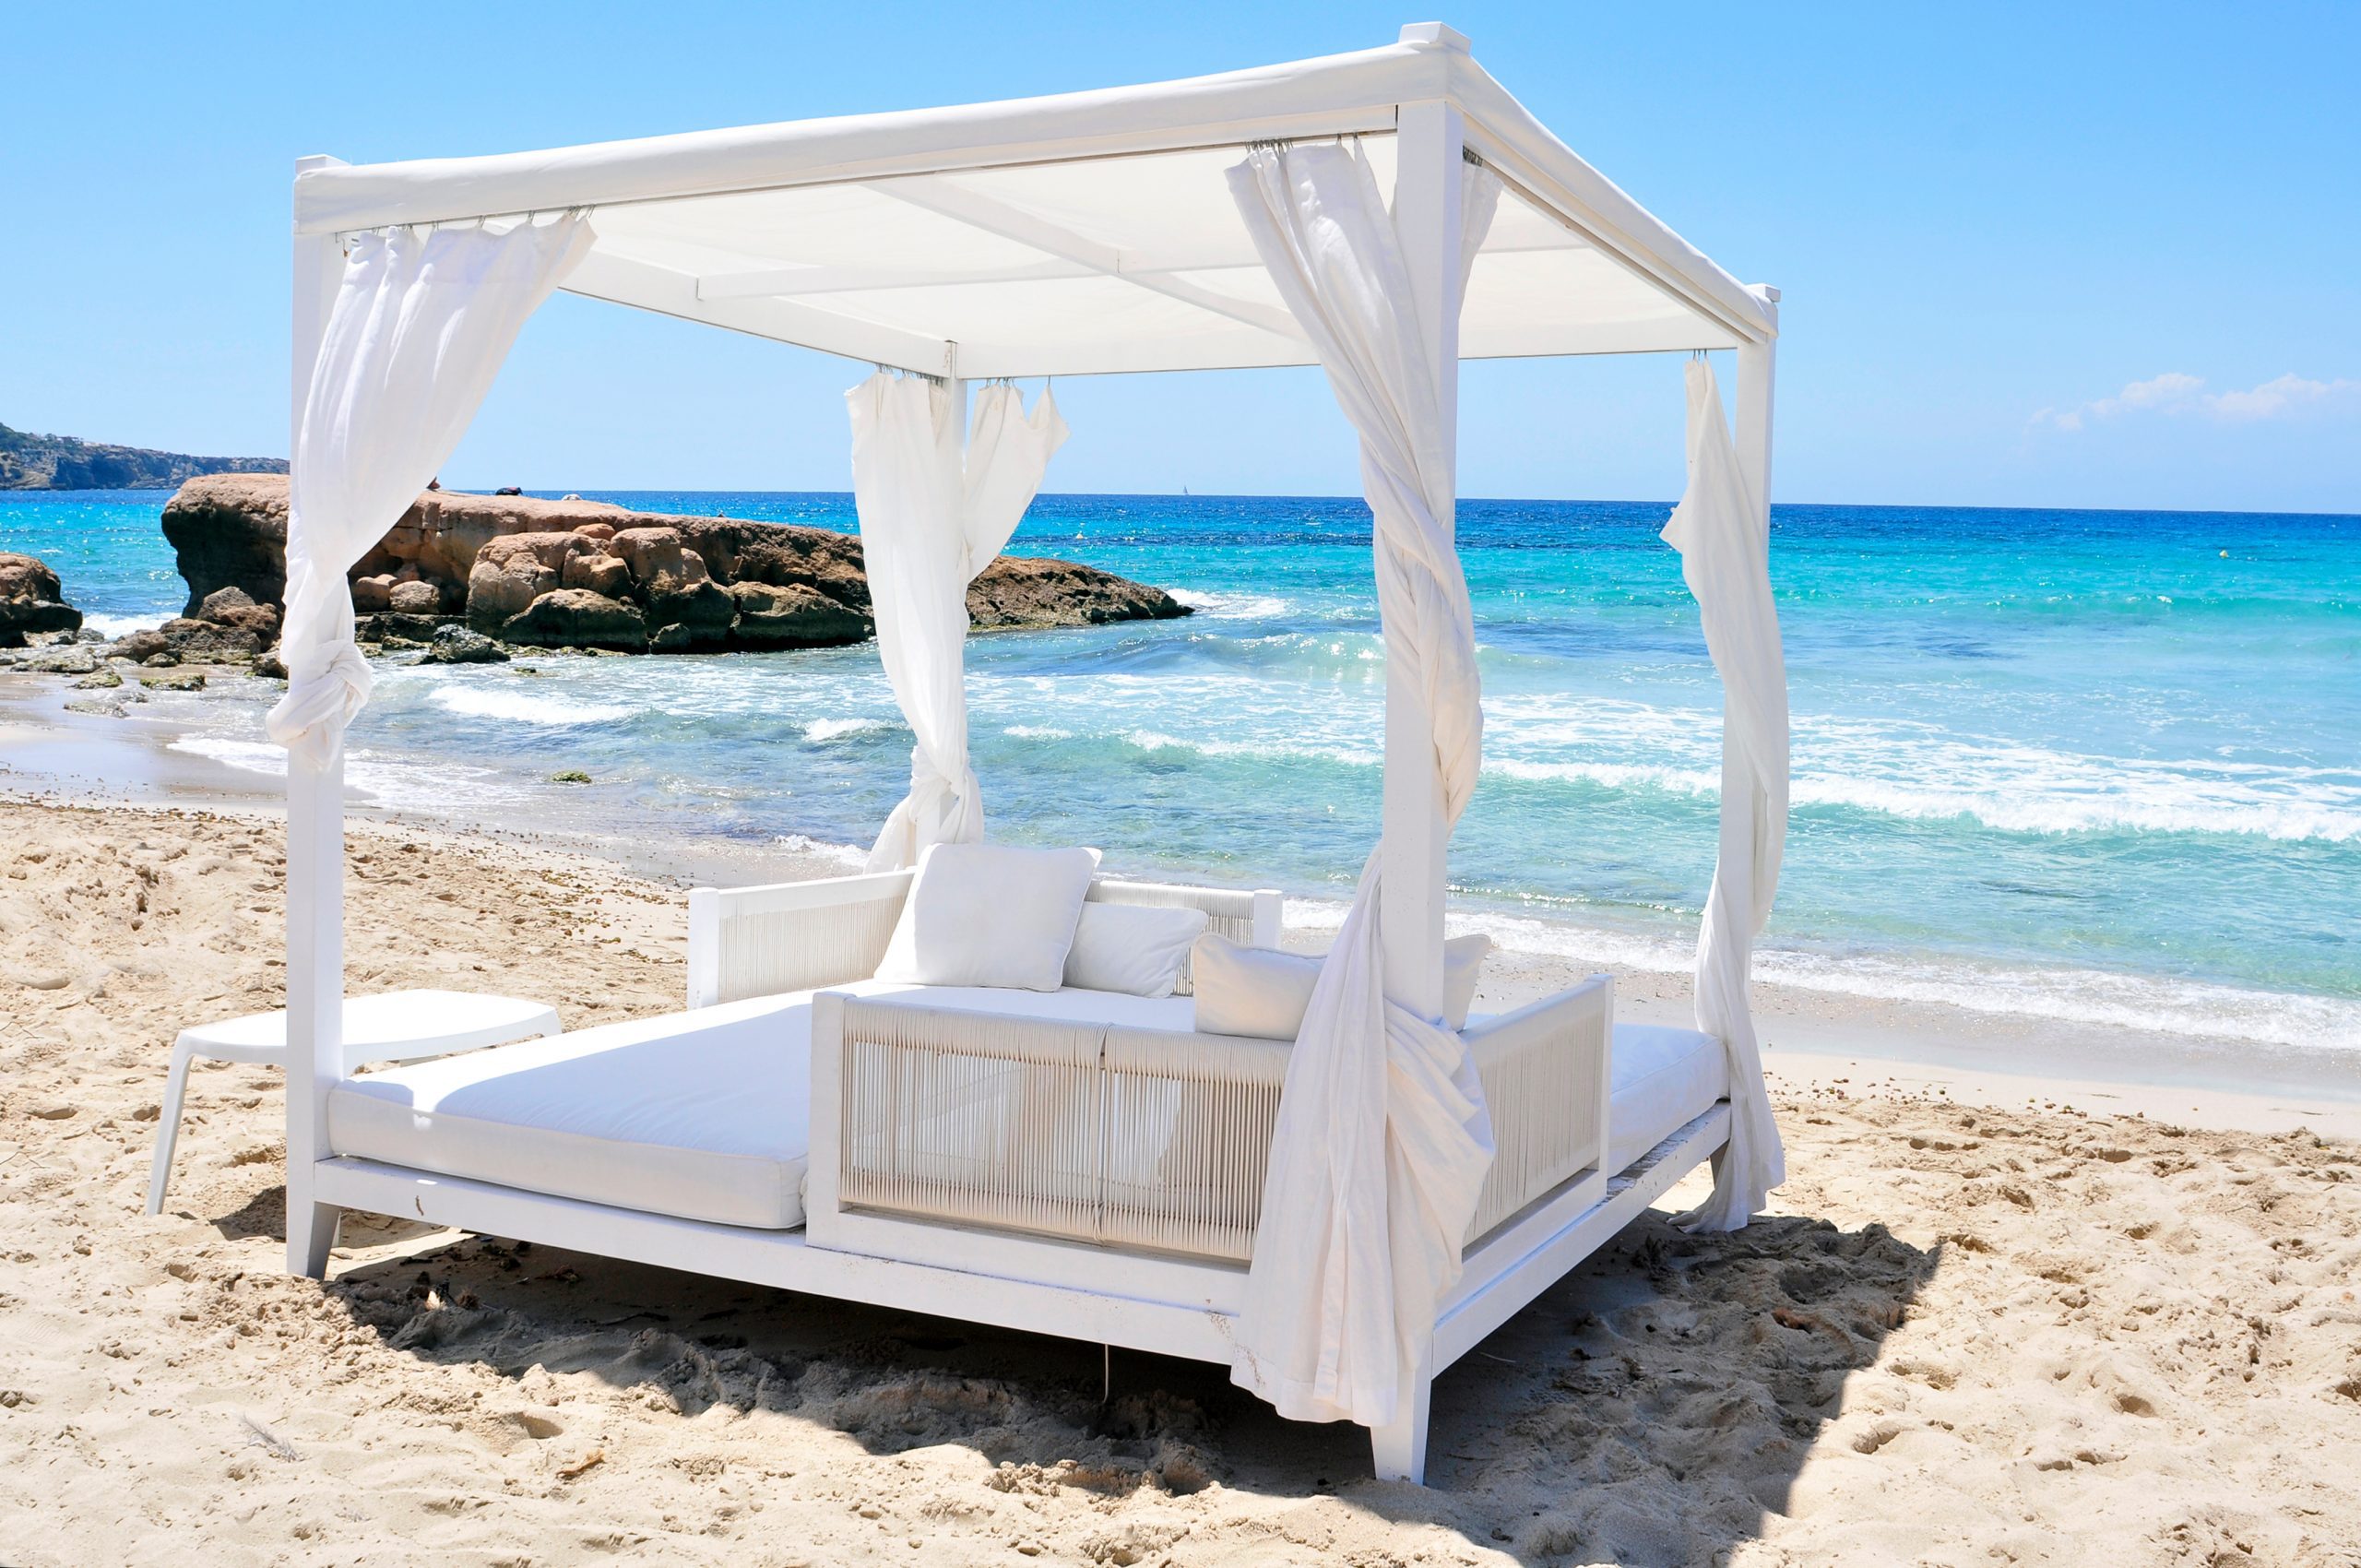 Ibiza beach club by private jet